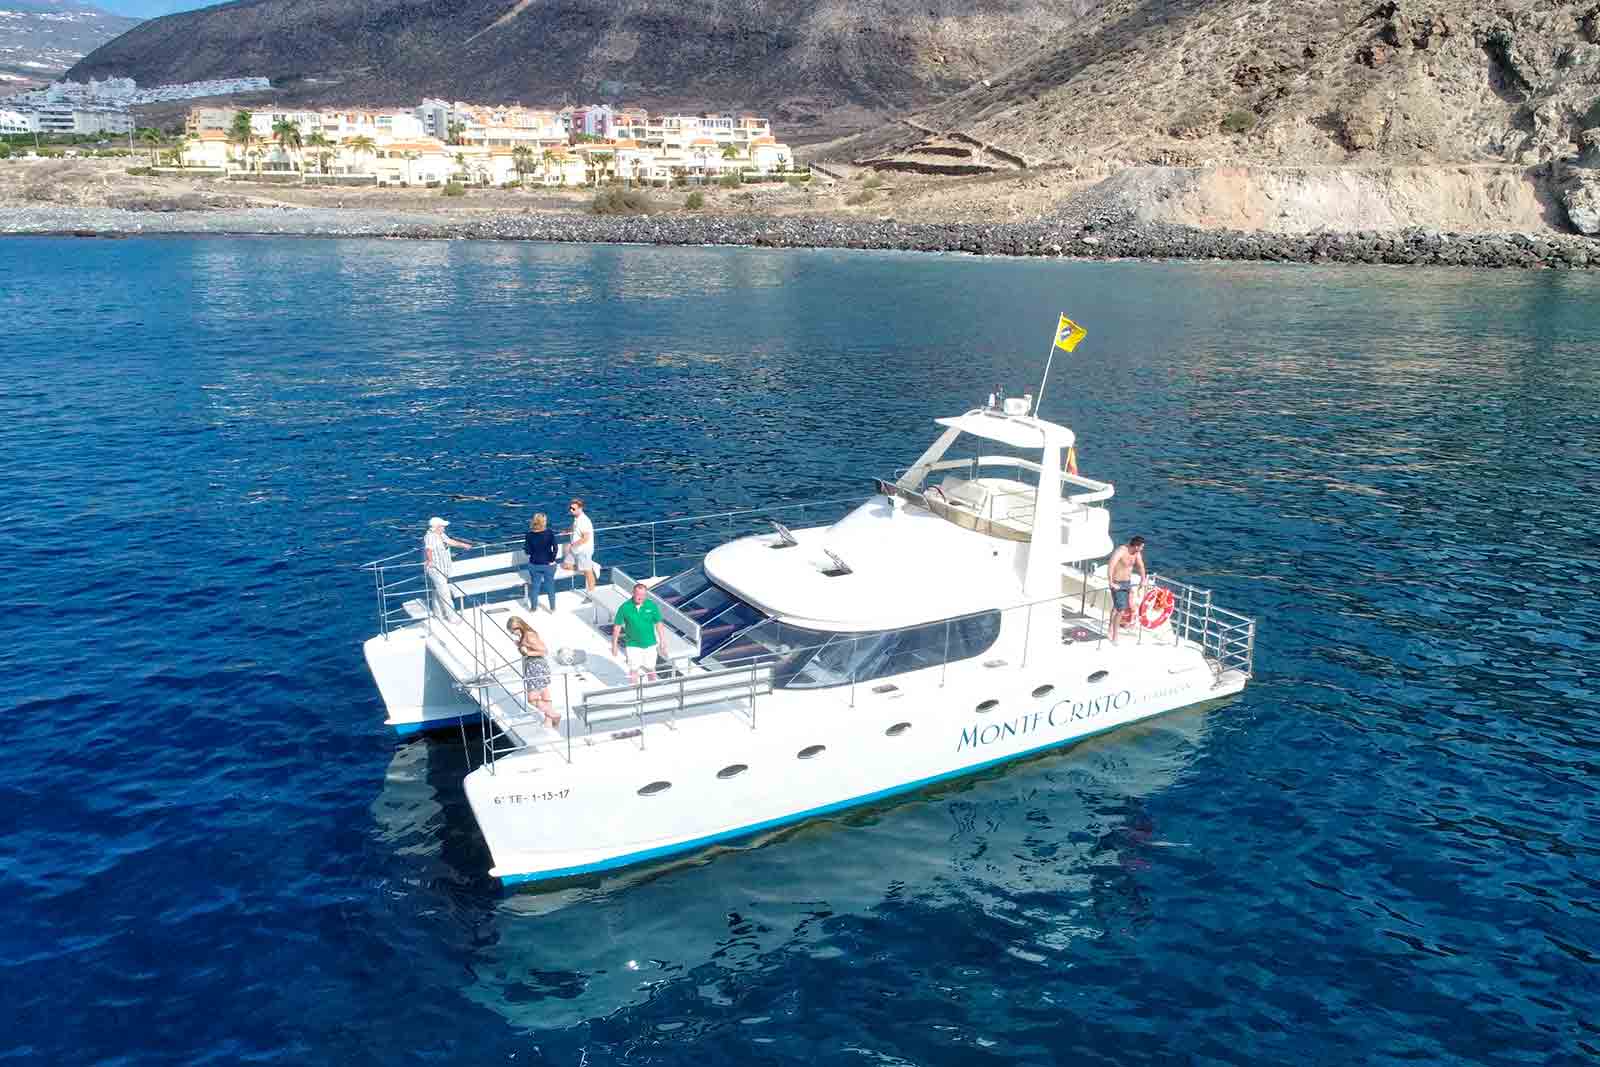 Catamaran Tours Tenerife